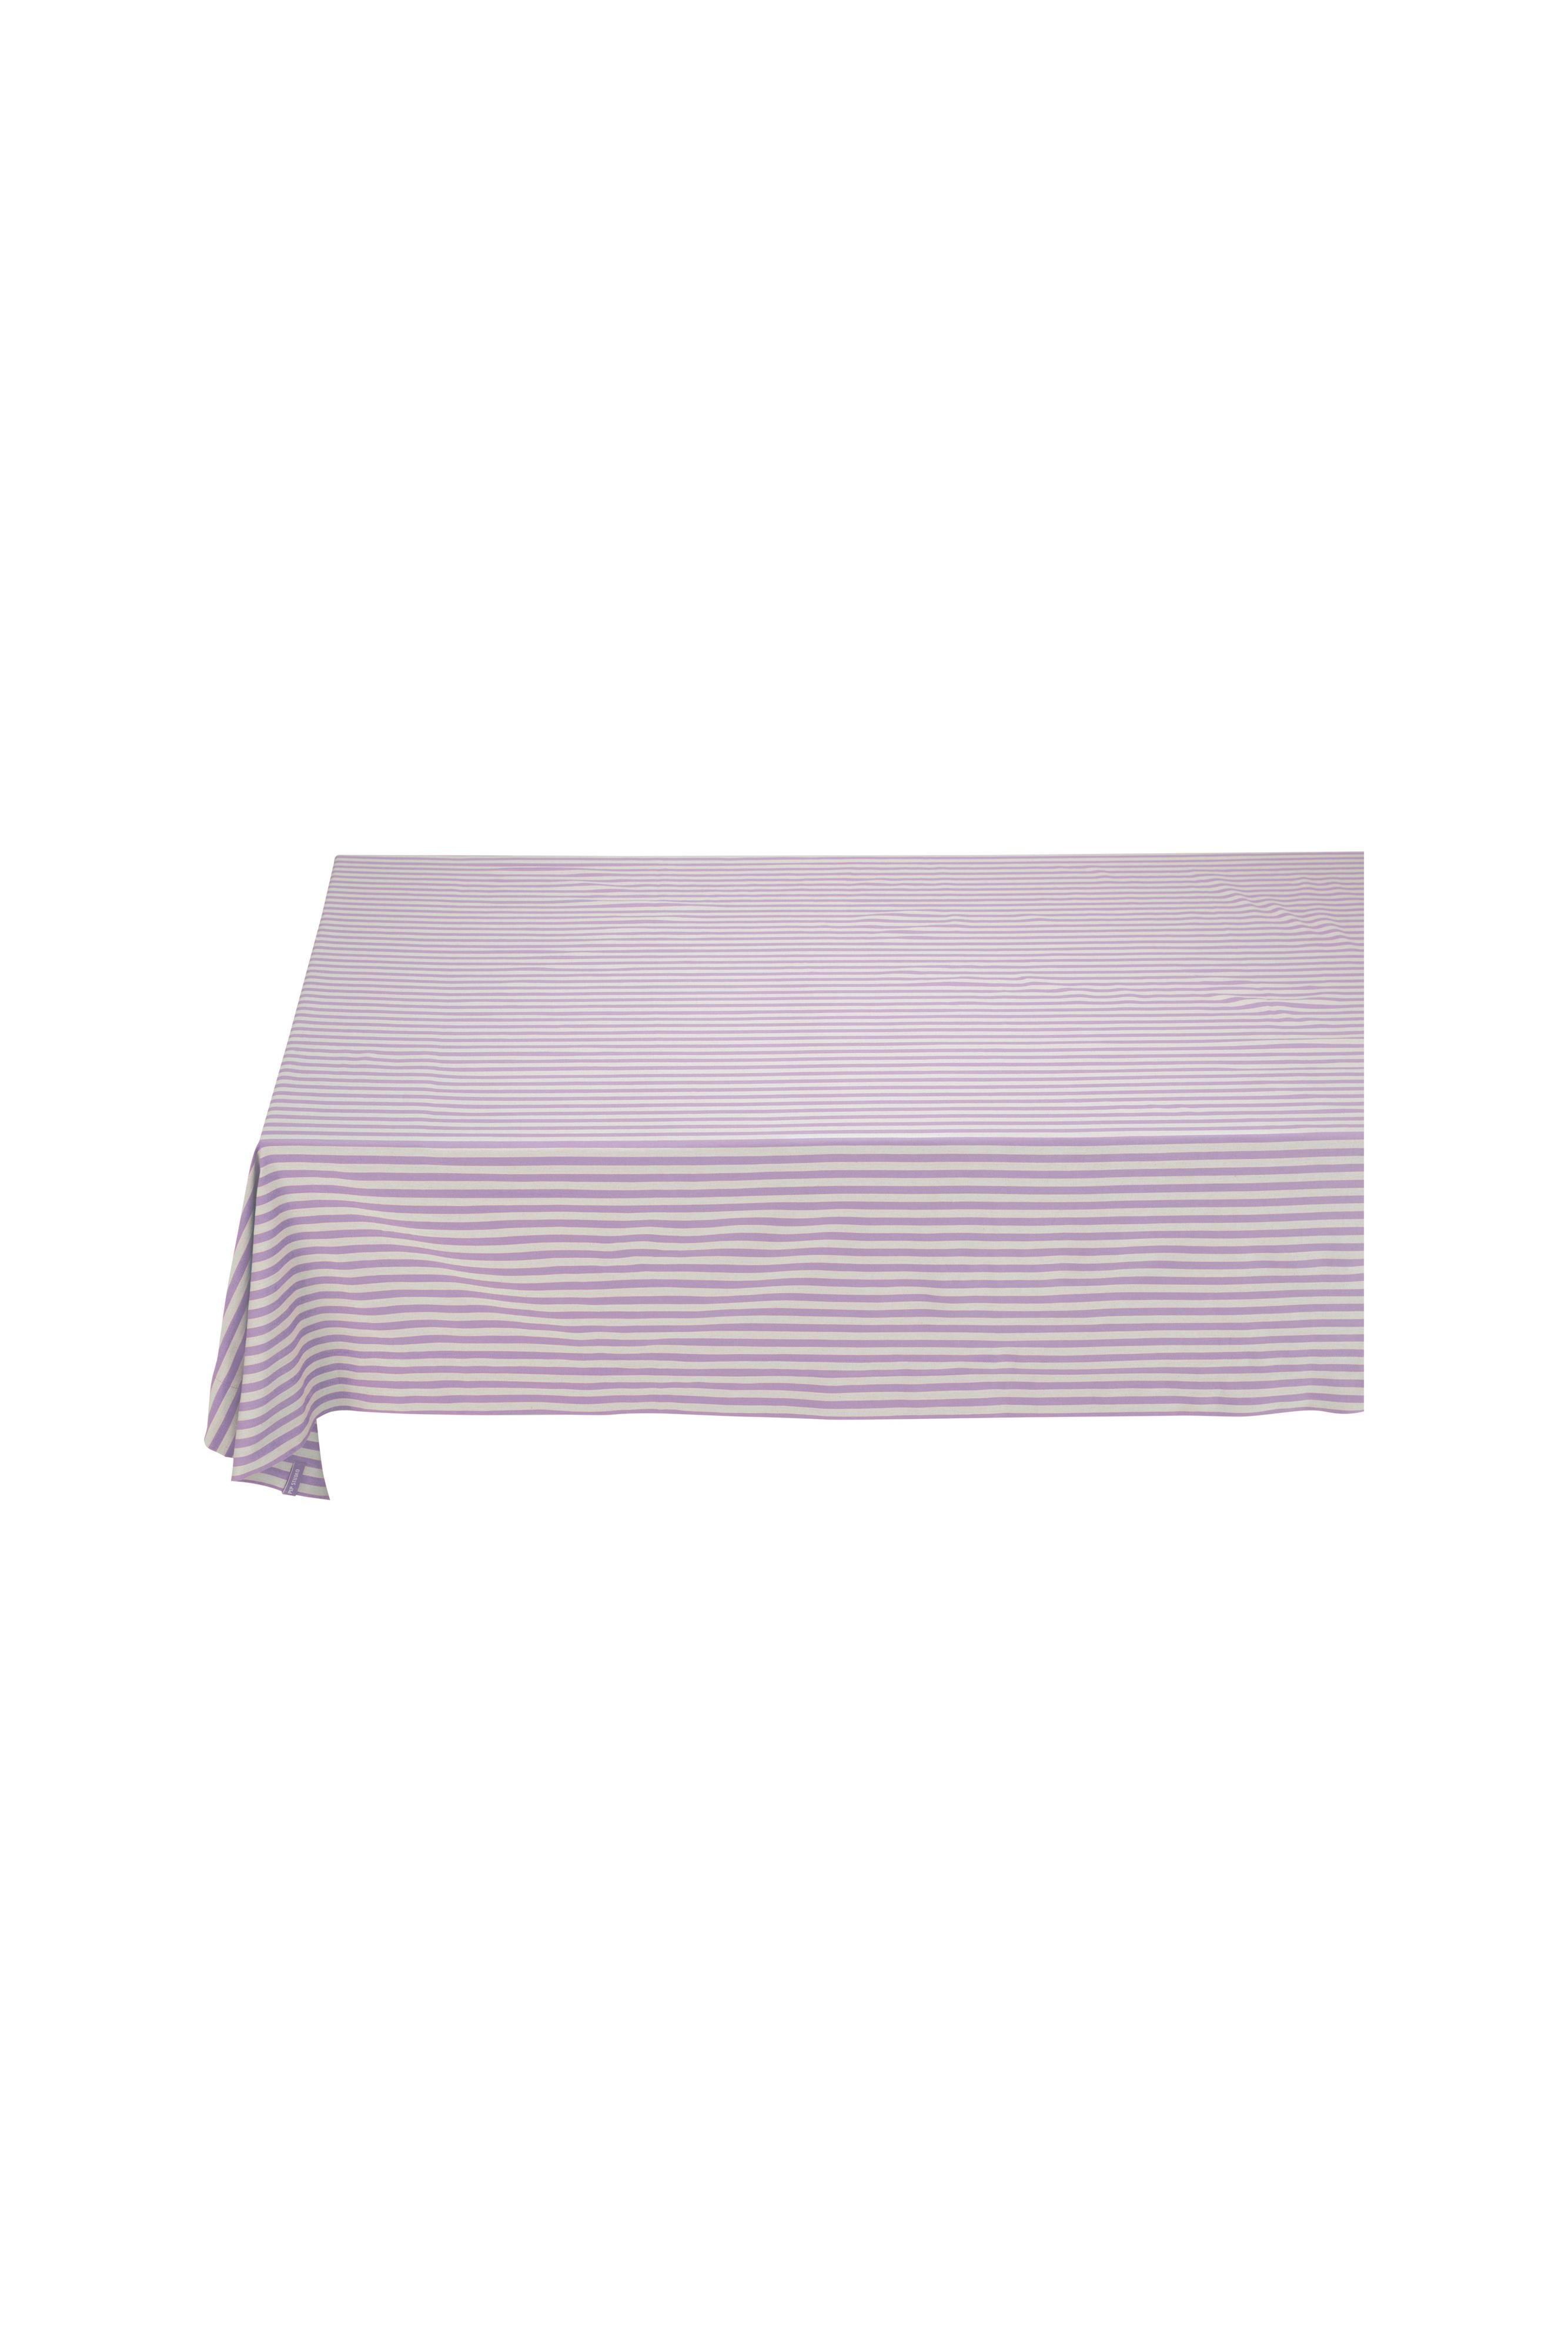 Table Cloth Stripes Lilac 180x300cm Gift